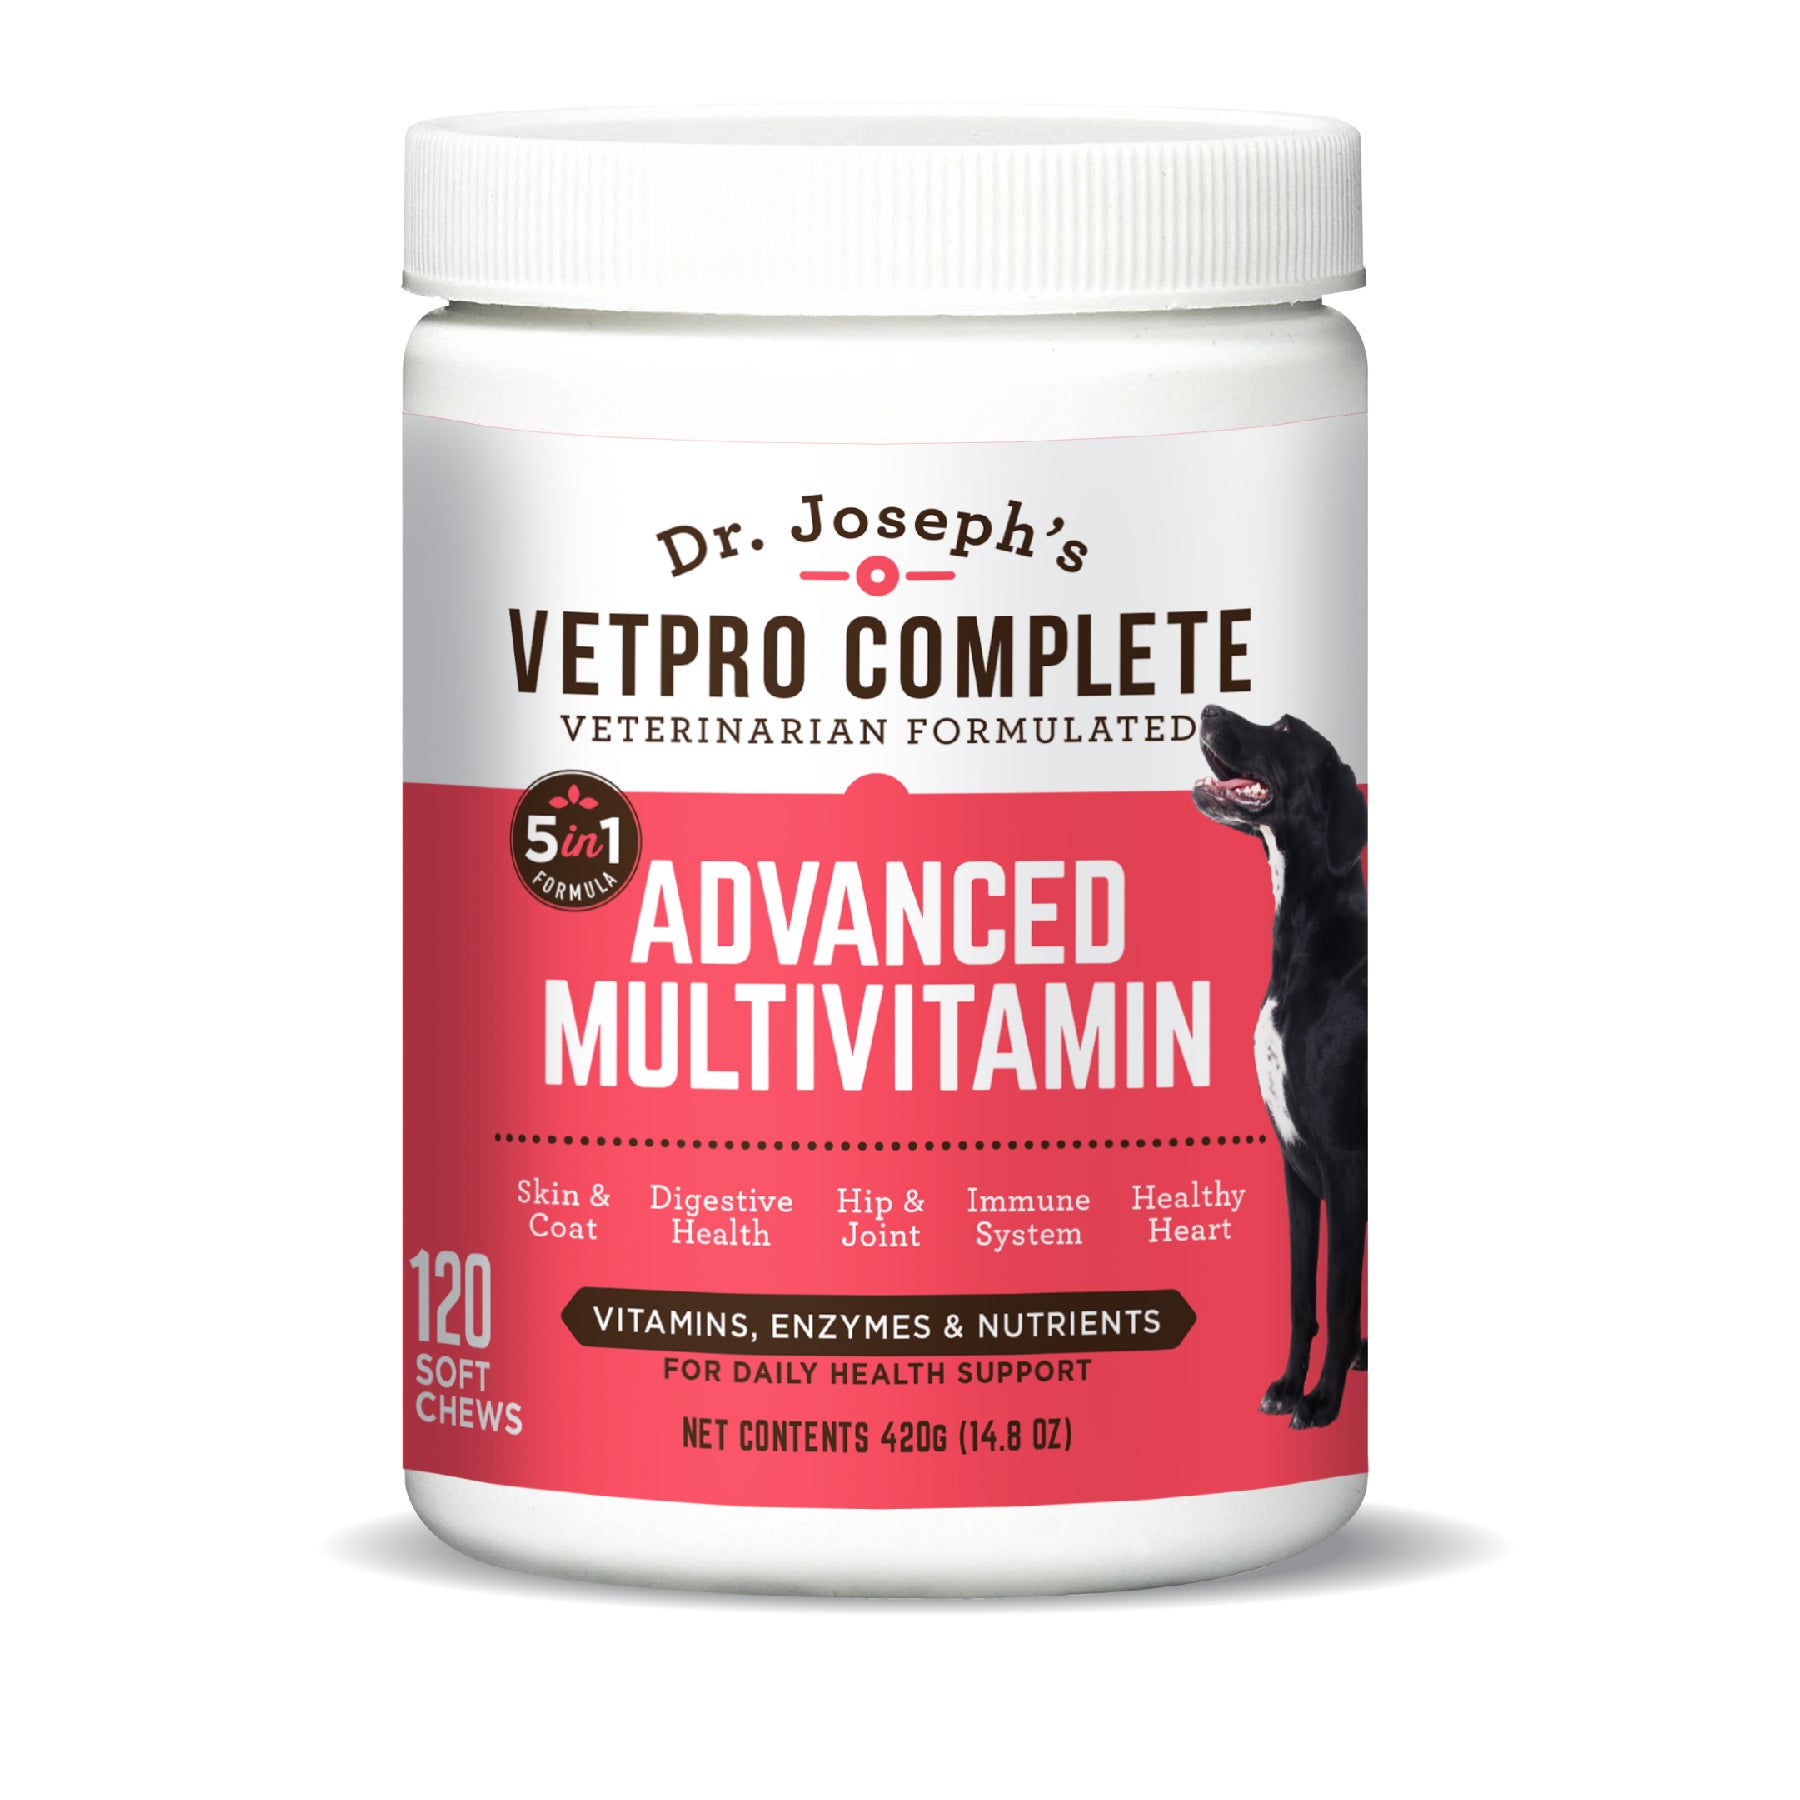 dr josephs advanced multivitamin for pets - vetpro complete